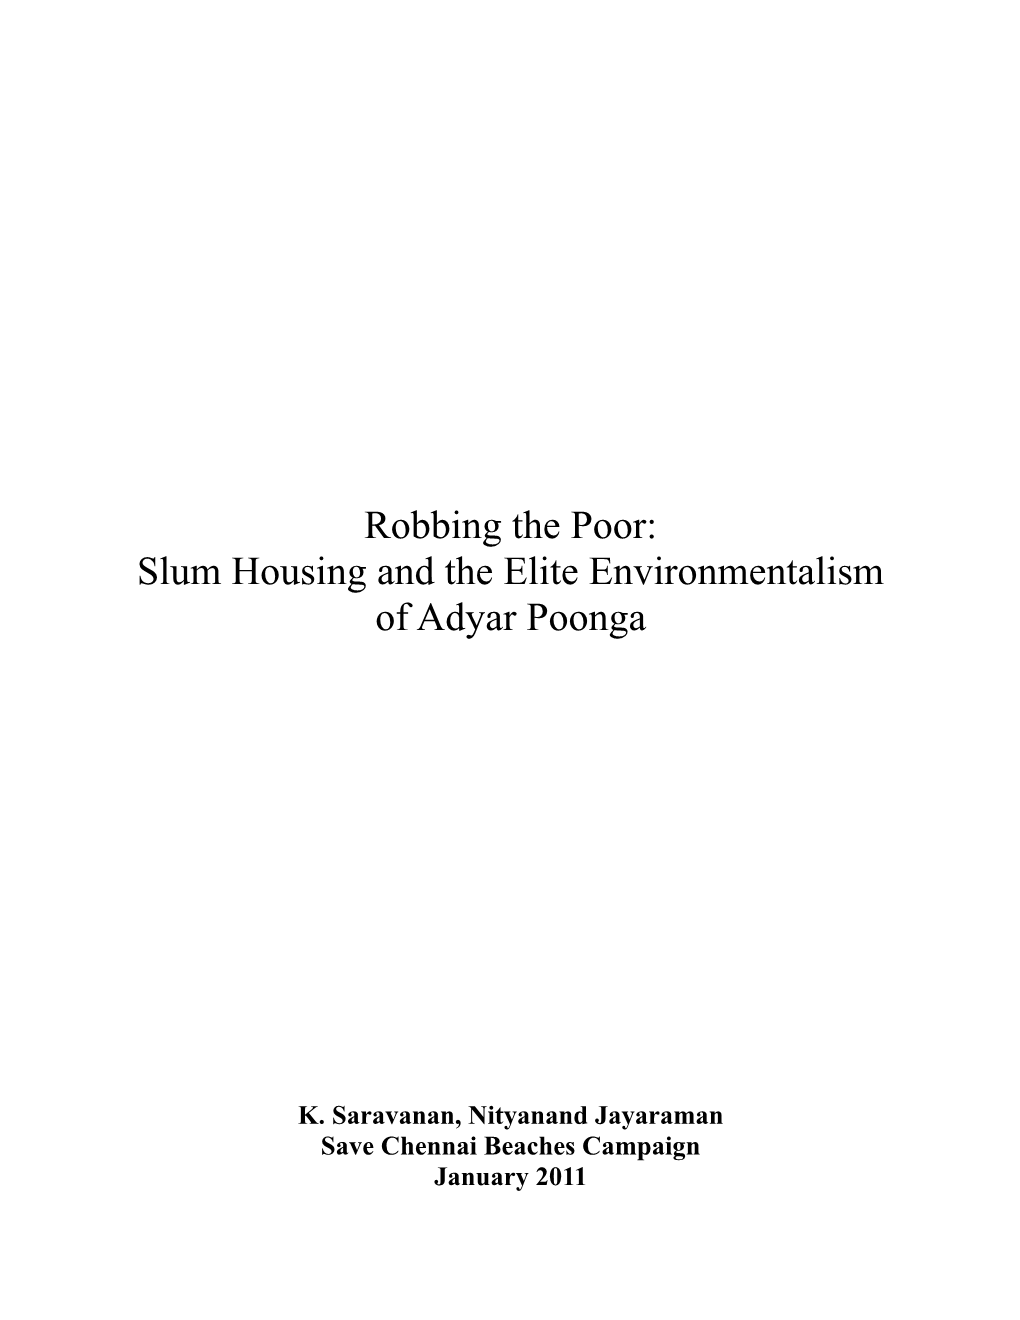 Robbing the Poor: Slum Housing and the Elite Environmentalism of Adyar Poonga